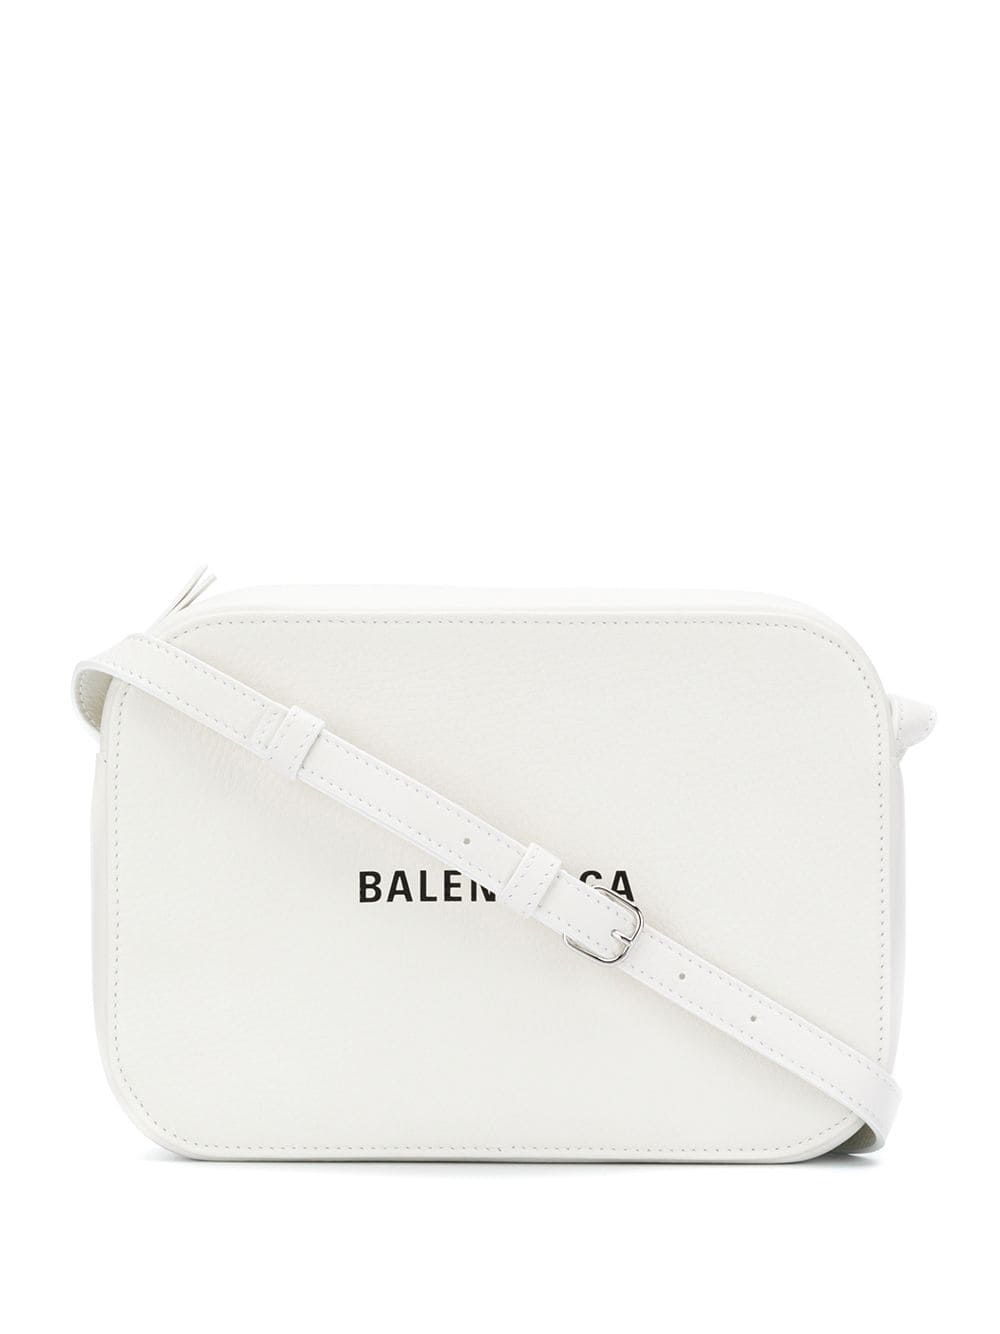 фото Balenciaga каркасная сумка everyday с логотипом